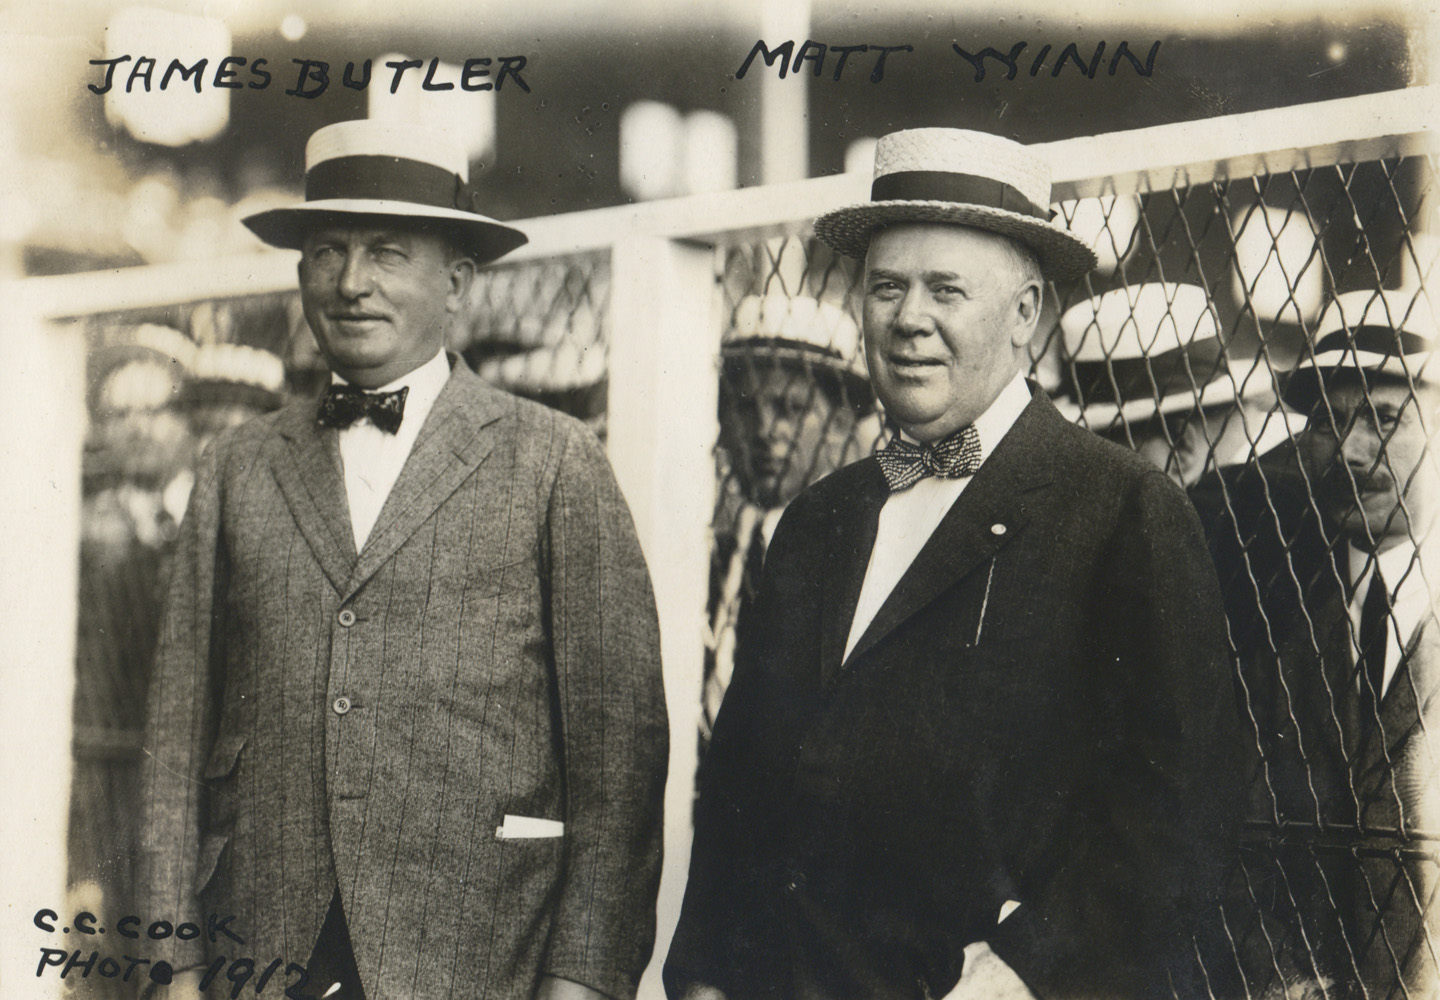 James Butler and Matt Winn in 1912 (C. C. Cook/Museum Collection)